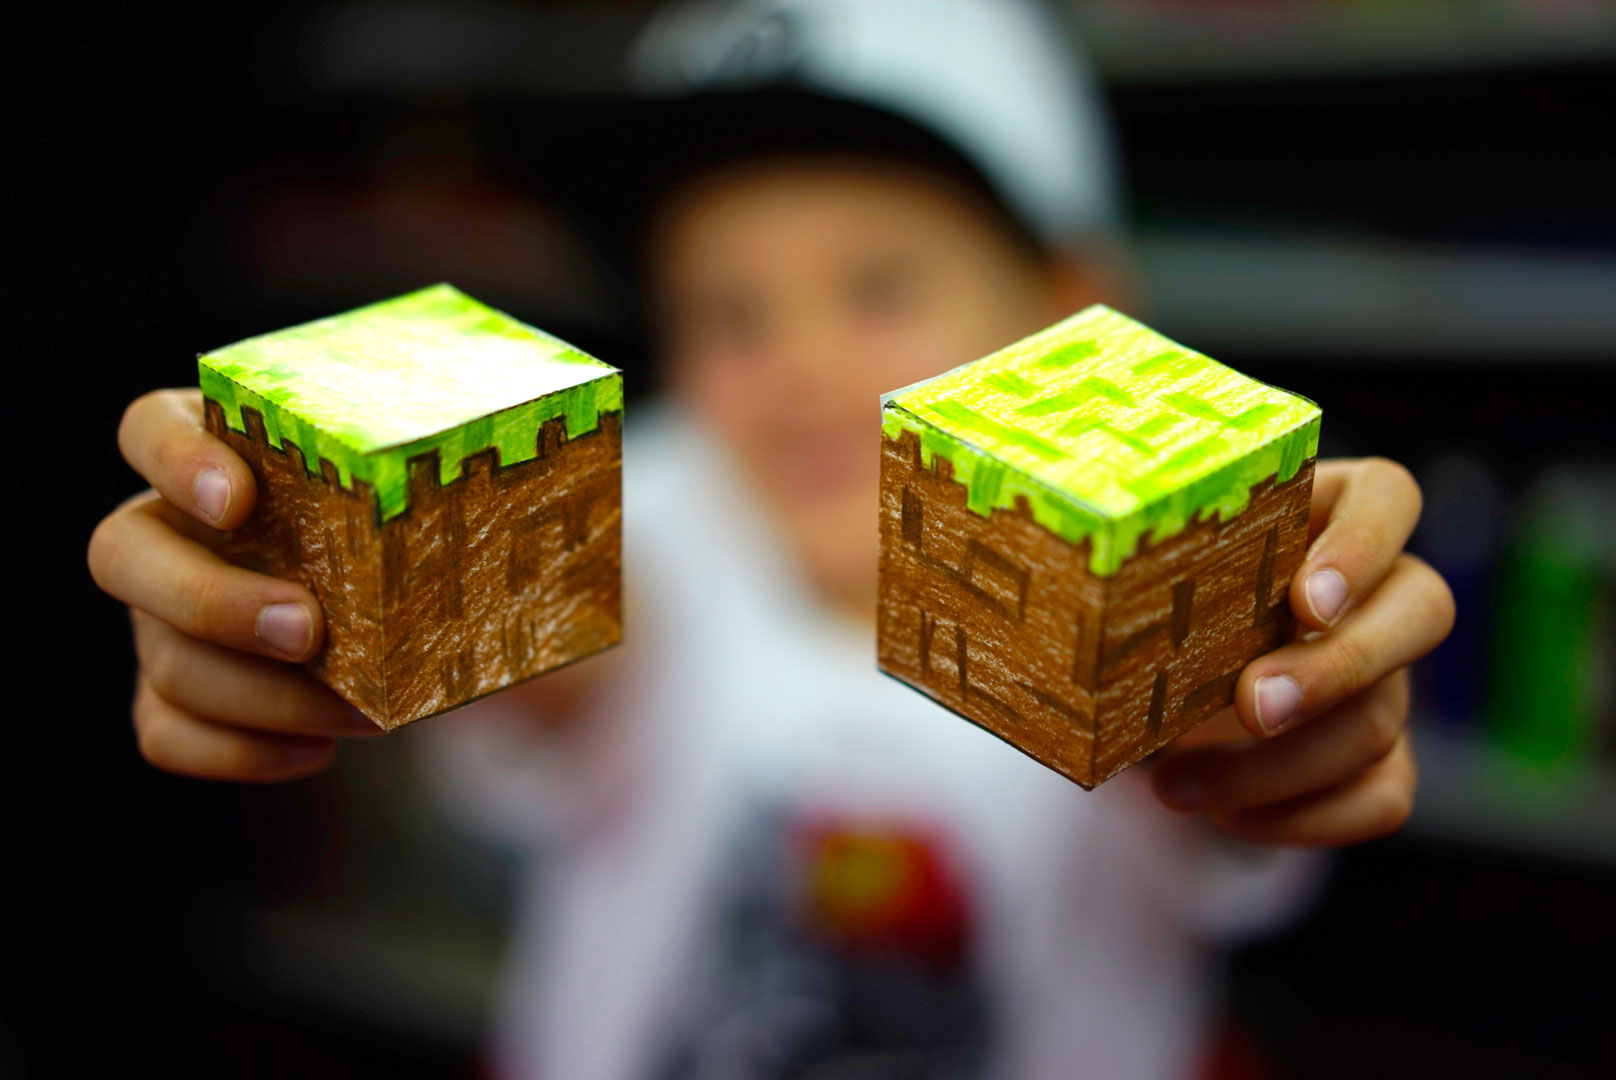 Printable paper crafts for Minecraft  Minecraft printables, Minecraft  blocks, Minecraft crafts